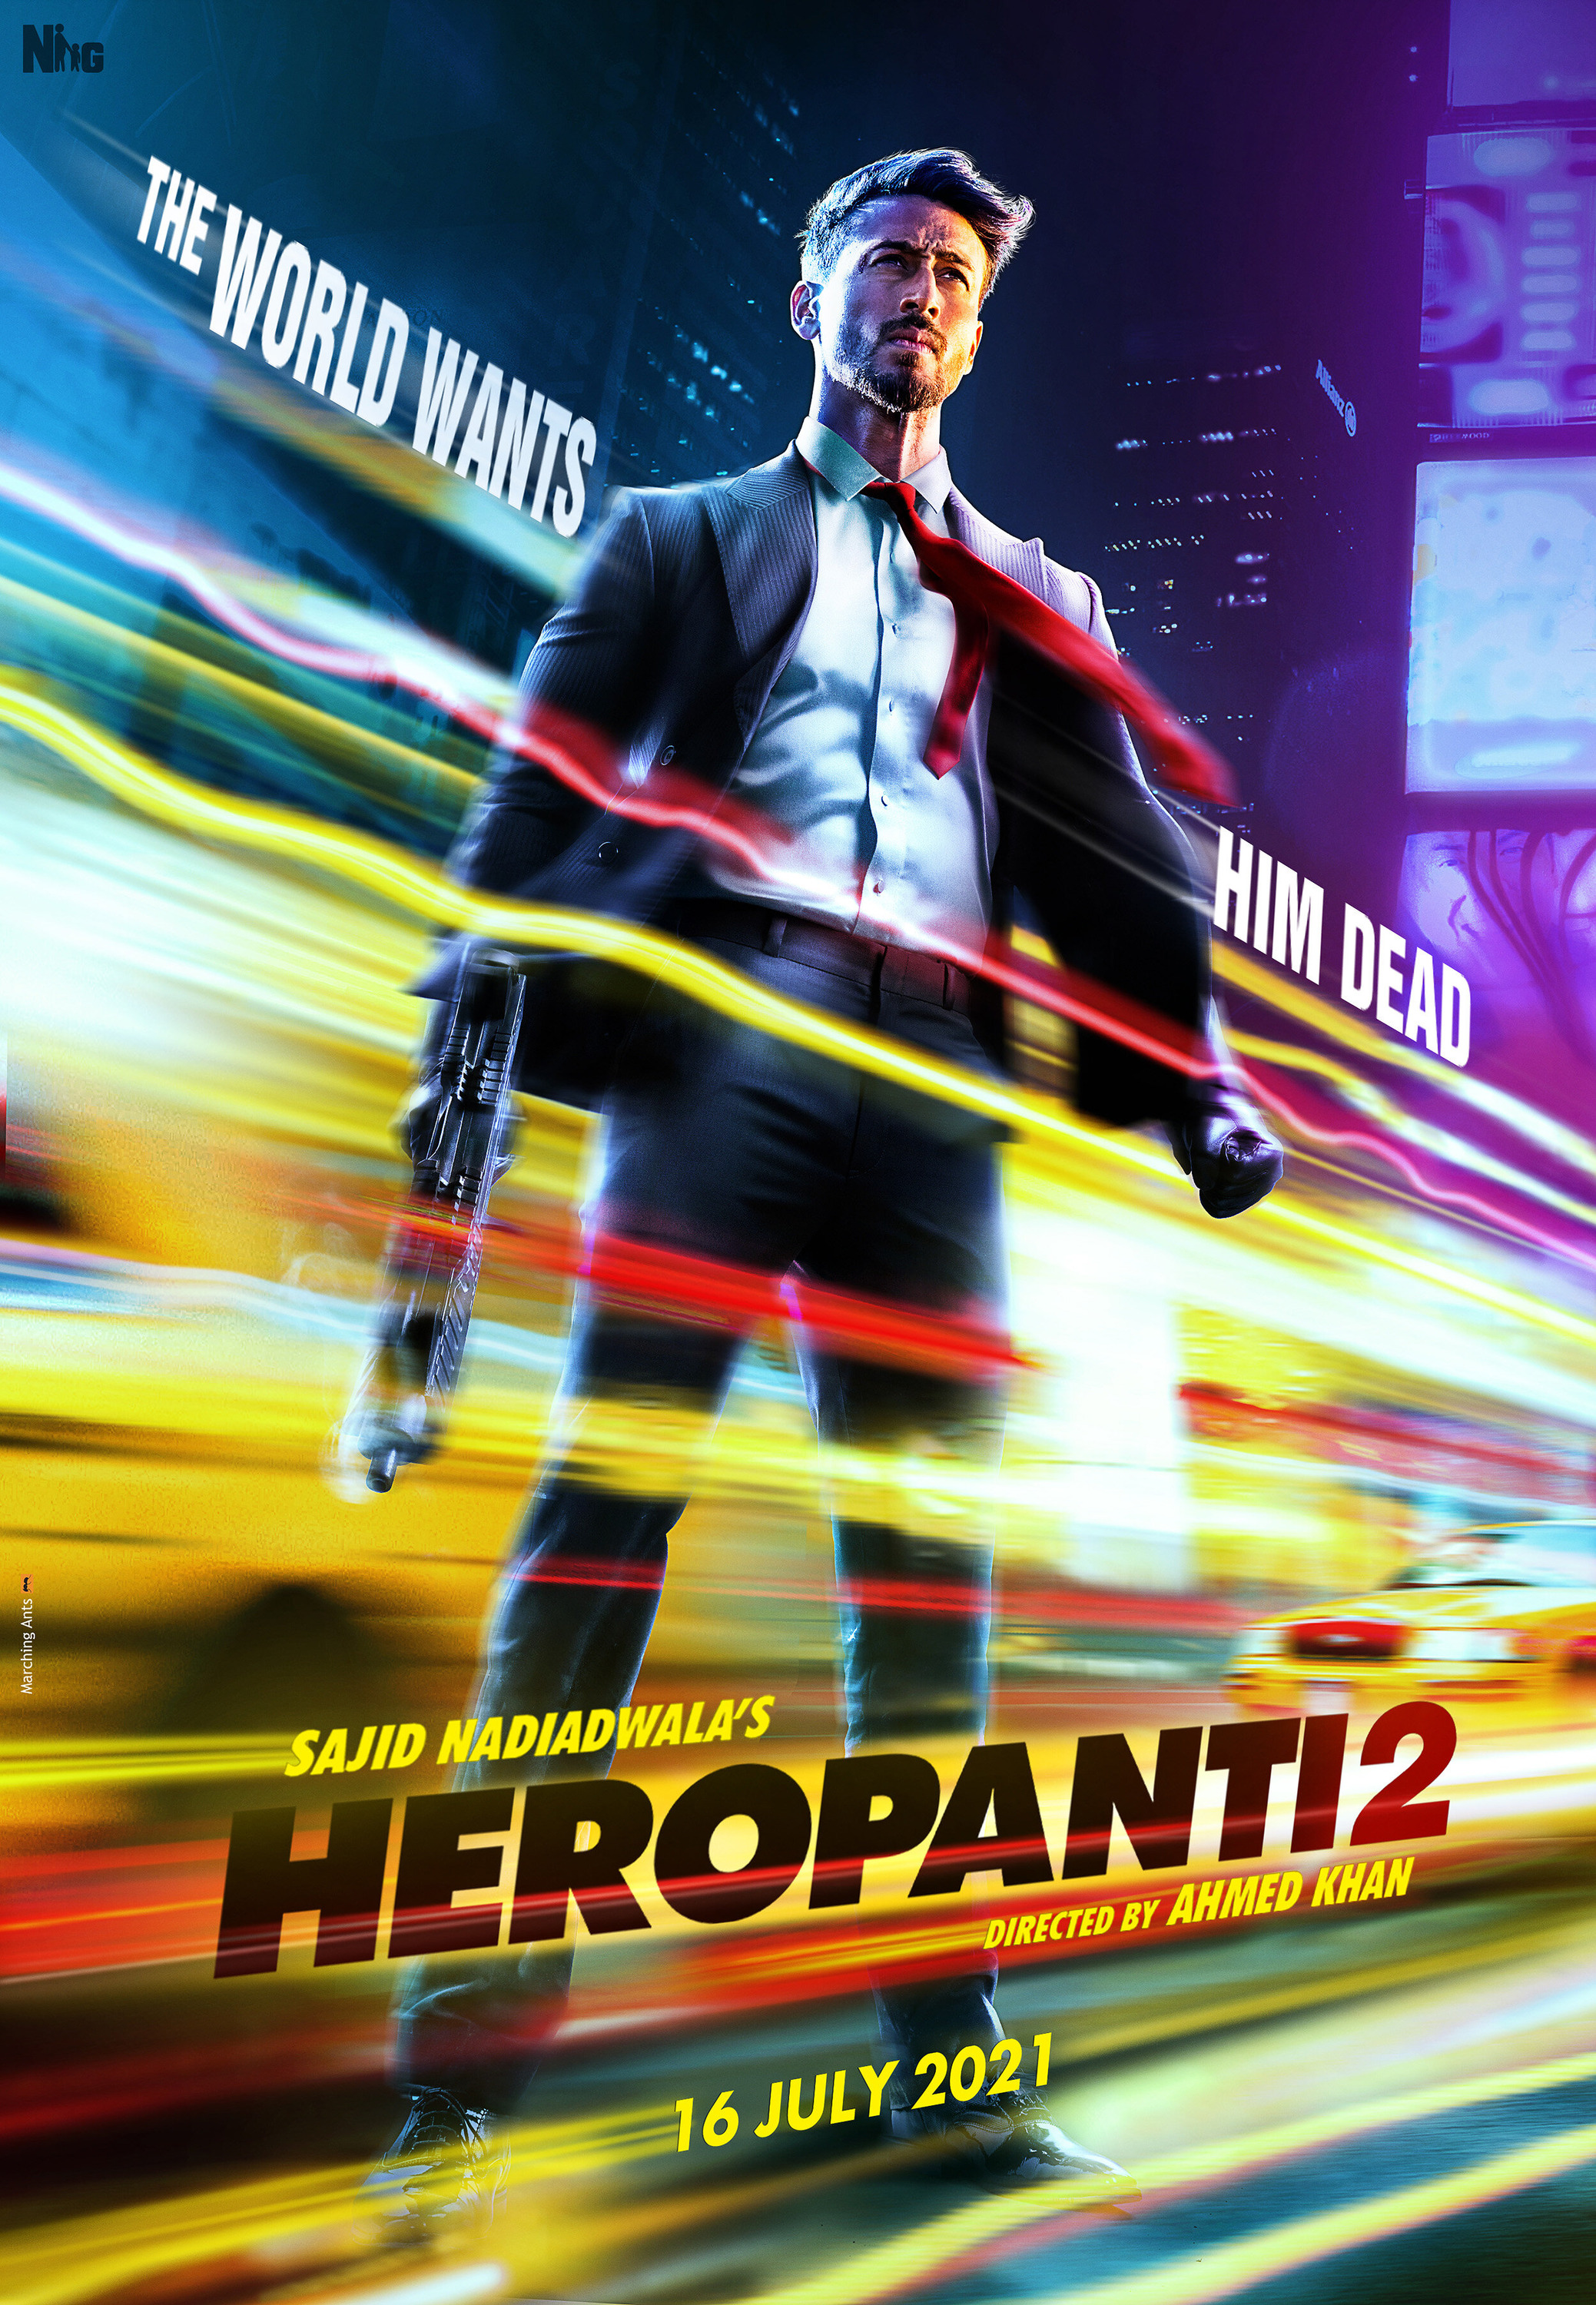 Mega Sized Movie Poster Image for Heropanti 2 (#2 of 2)